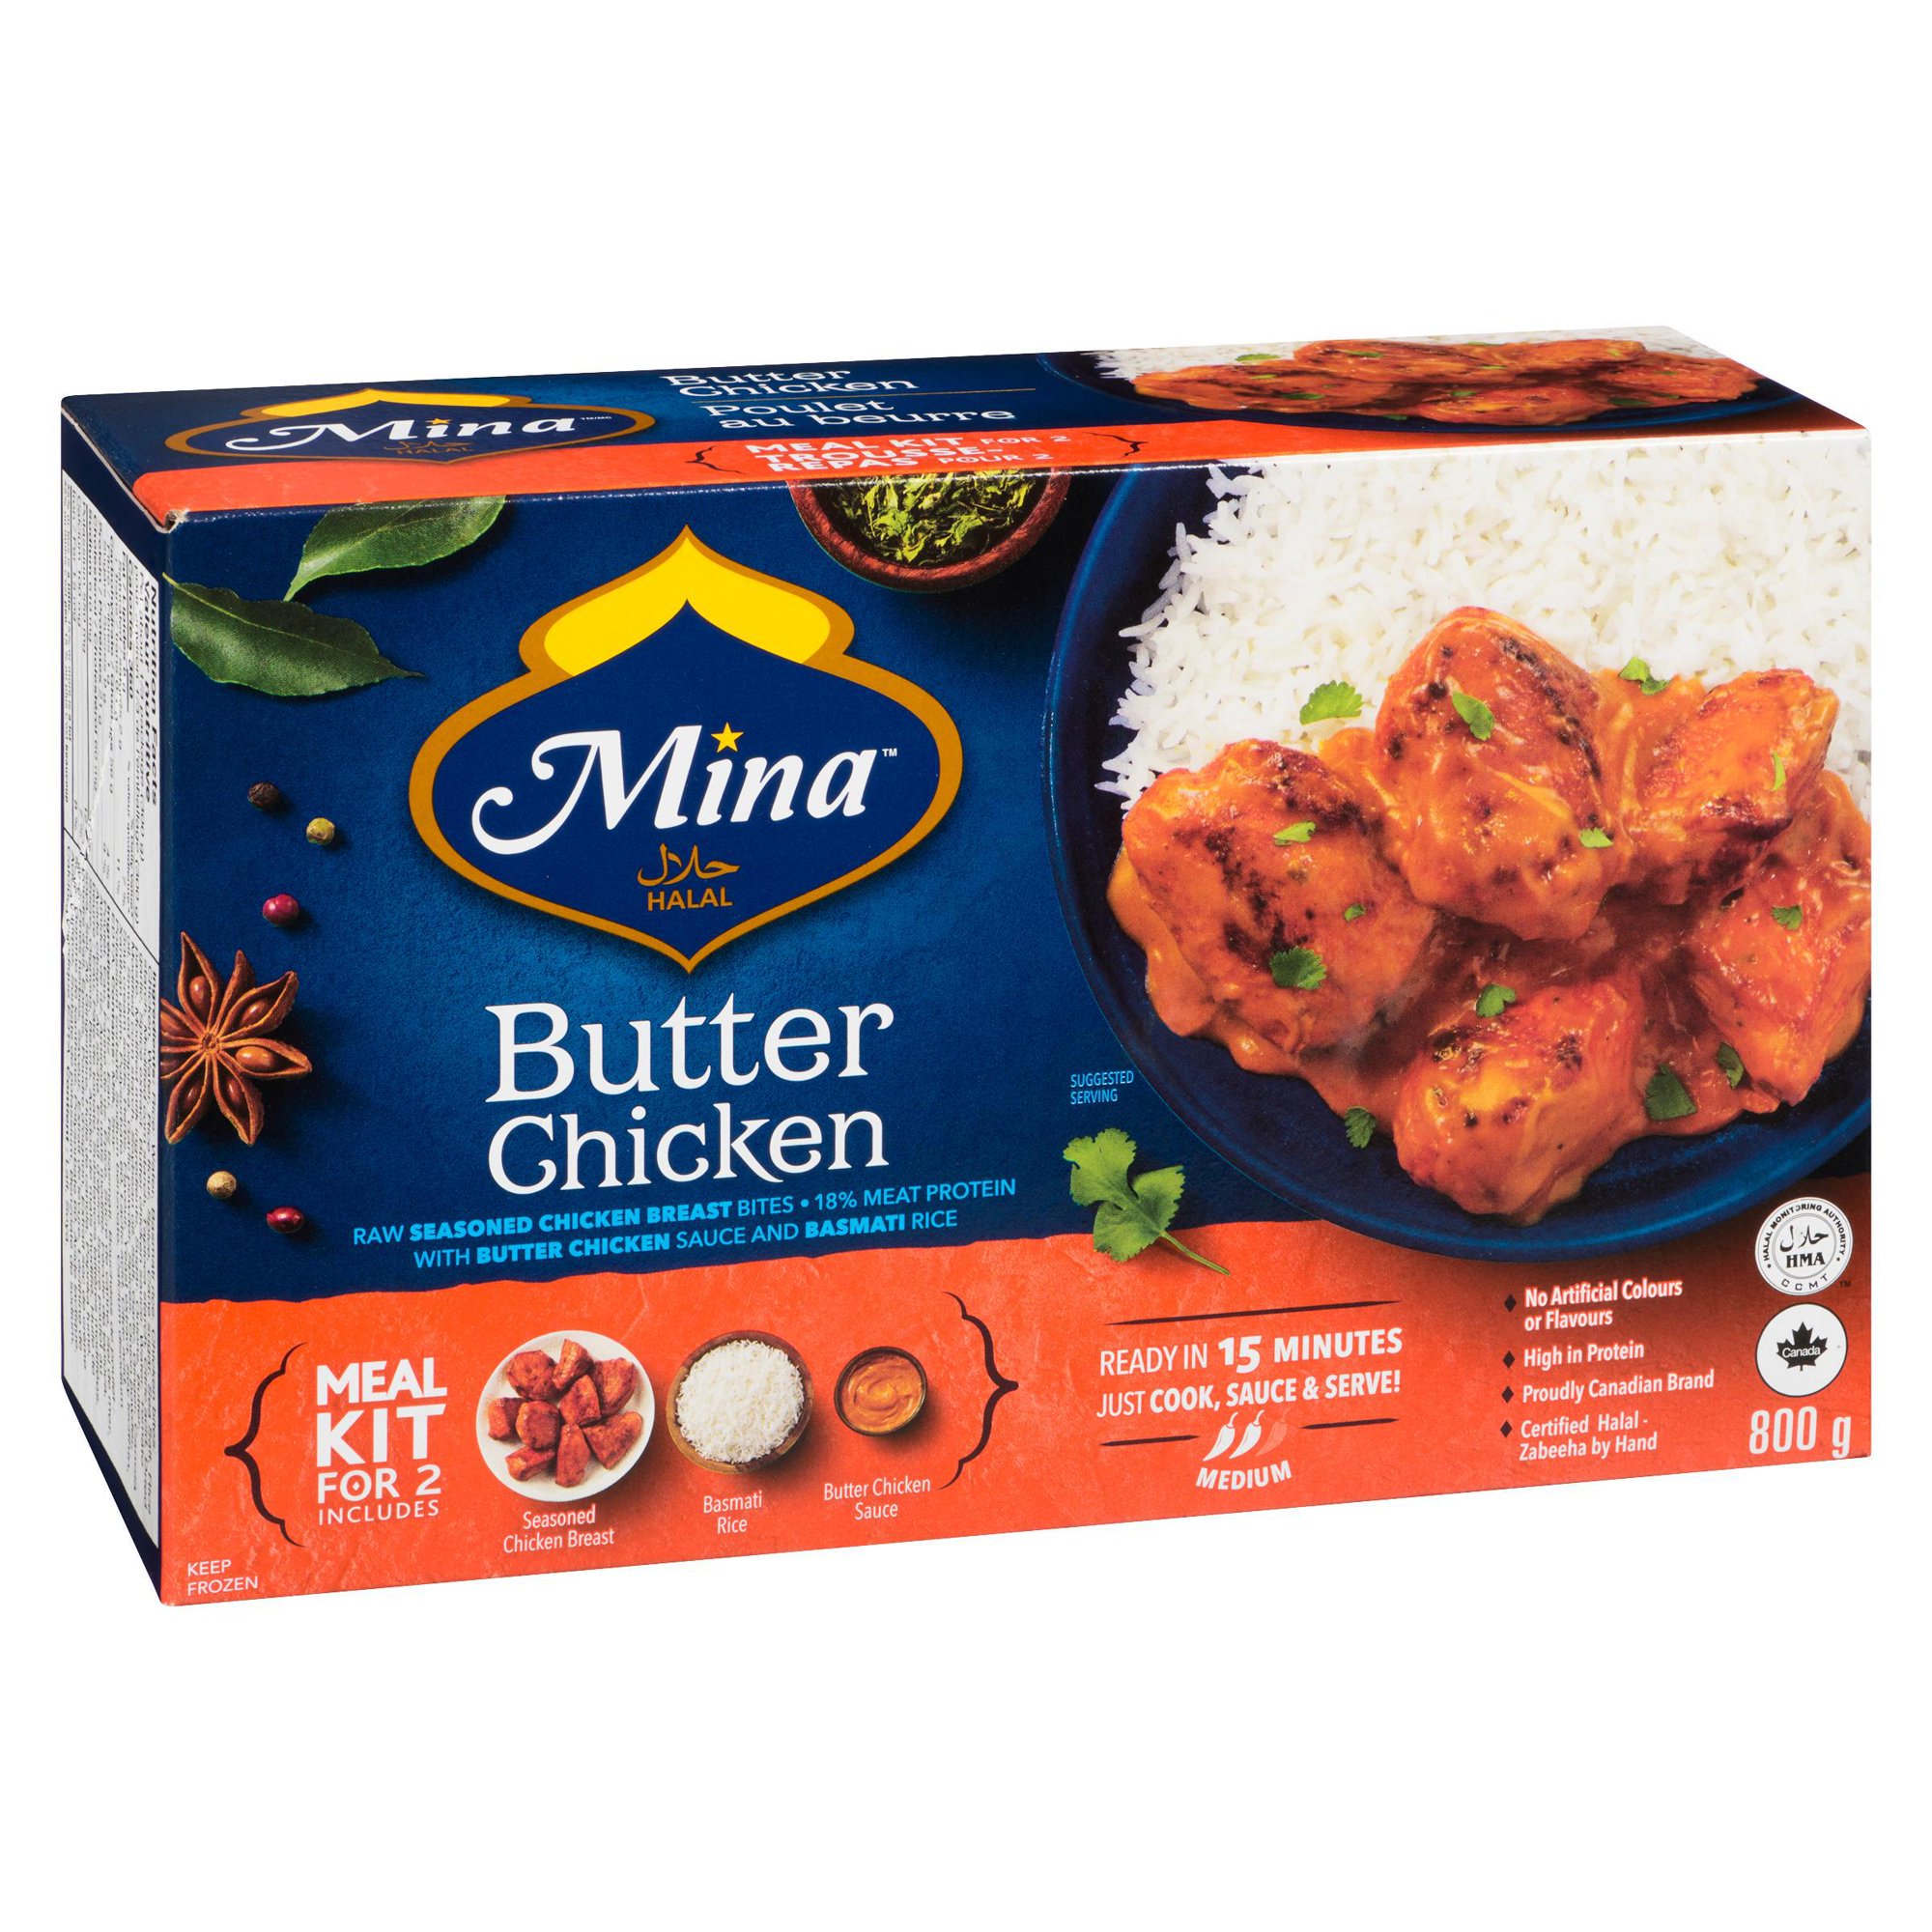 http://atiyasfreshfarm.com/public/storage/photos/1/Products 6/Mina Butter Chicken.jpeg